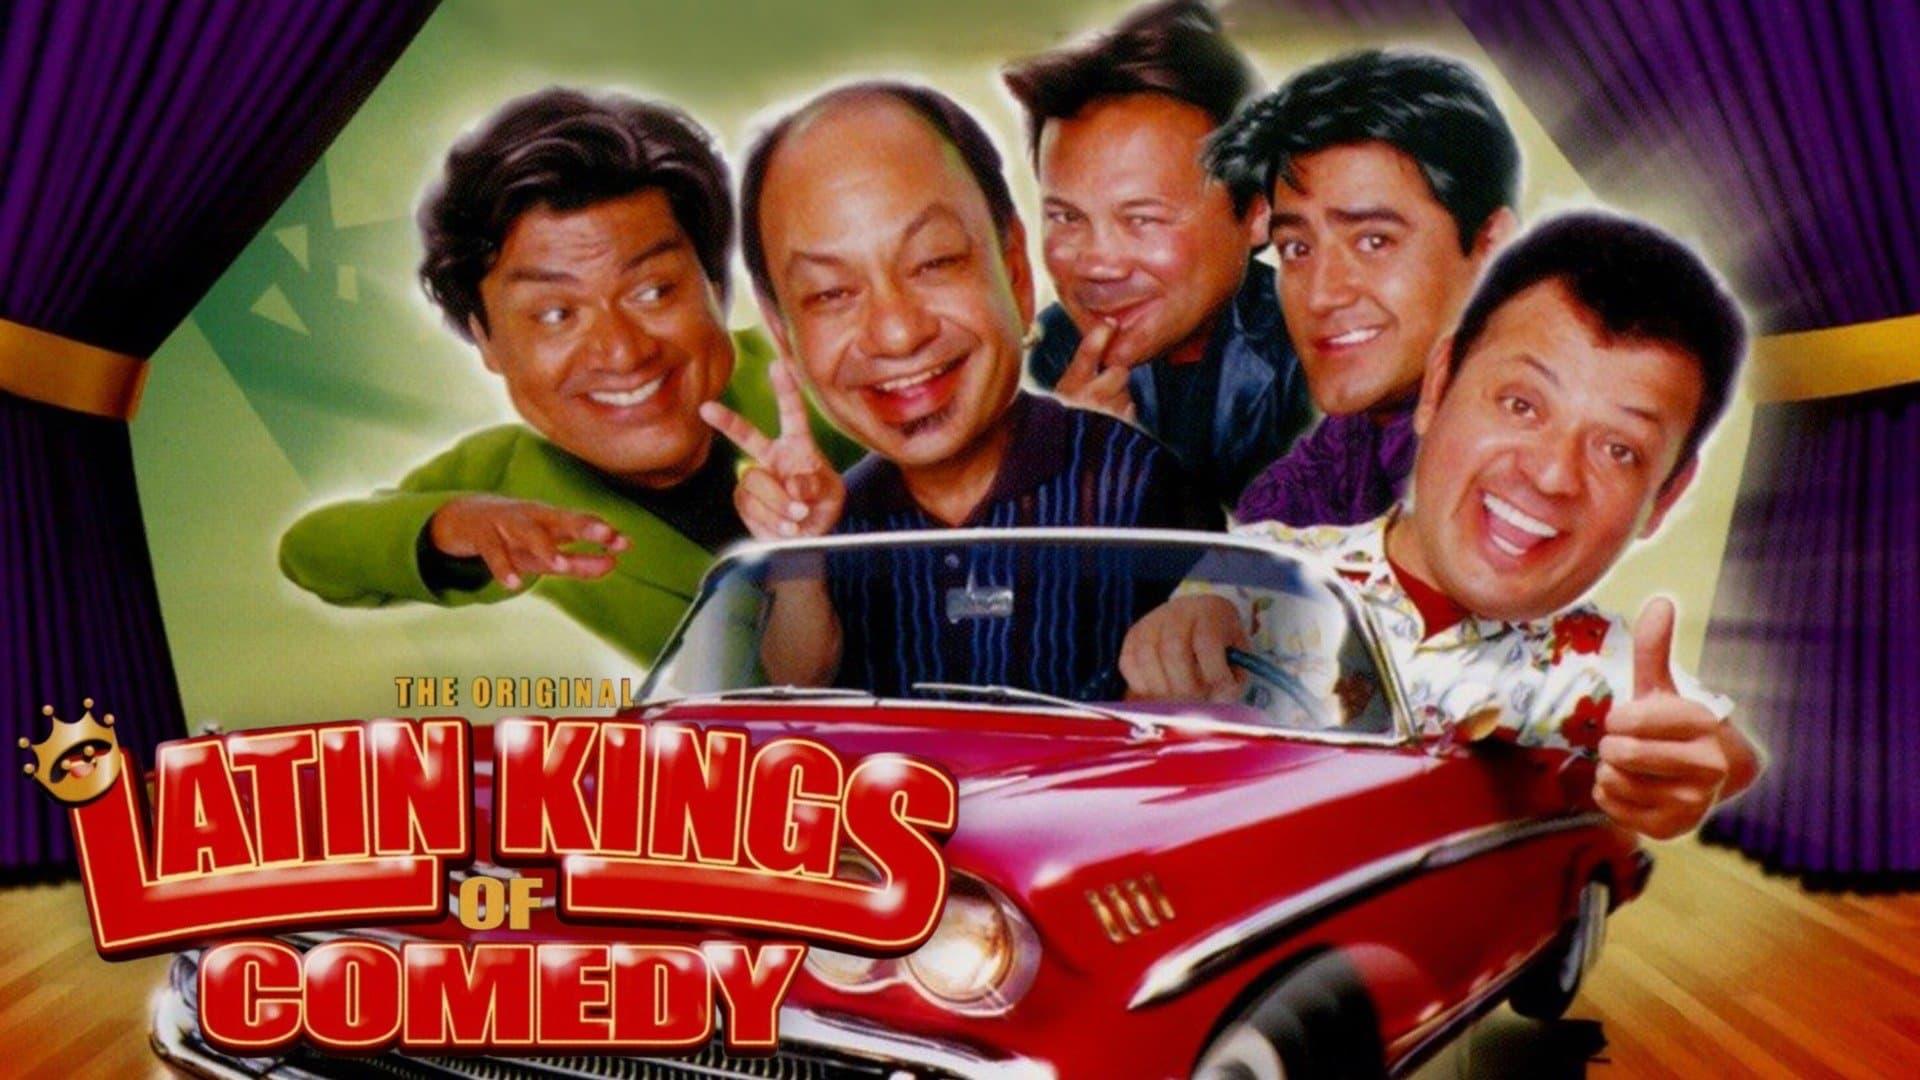 The Original Latin Kings of Comedy backdrop